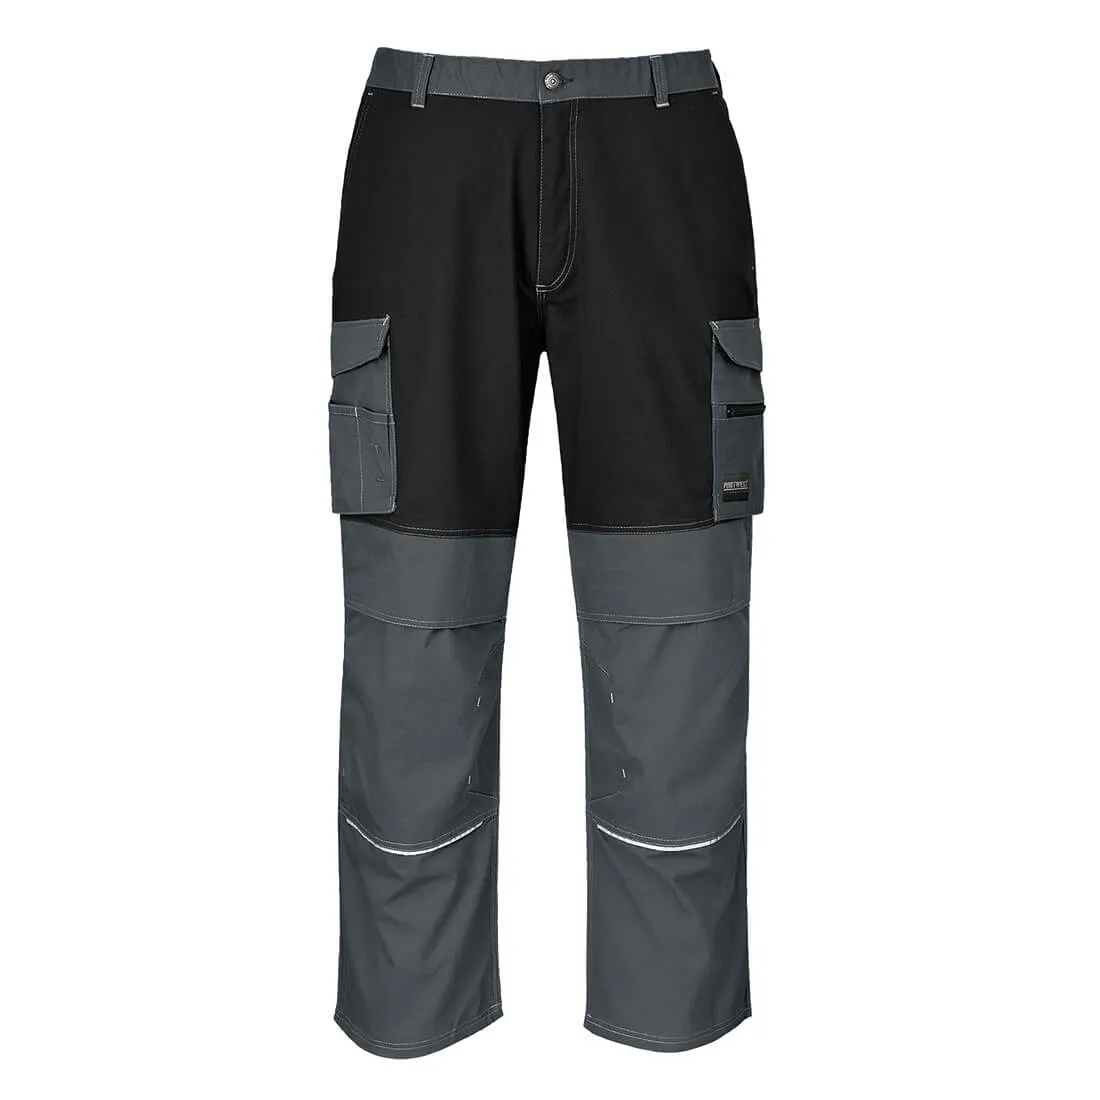 Portwest KS13 Granite Trousers - Grey / Black, Large, 31"